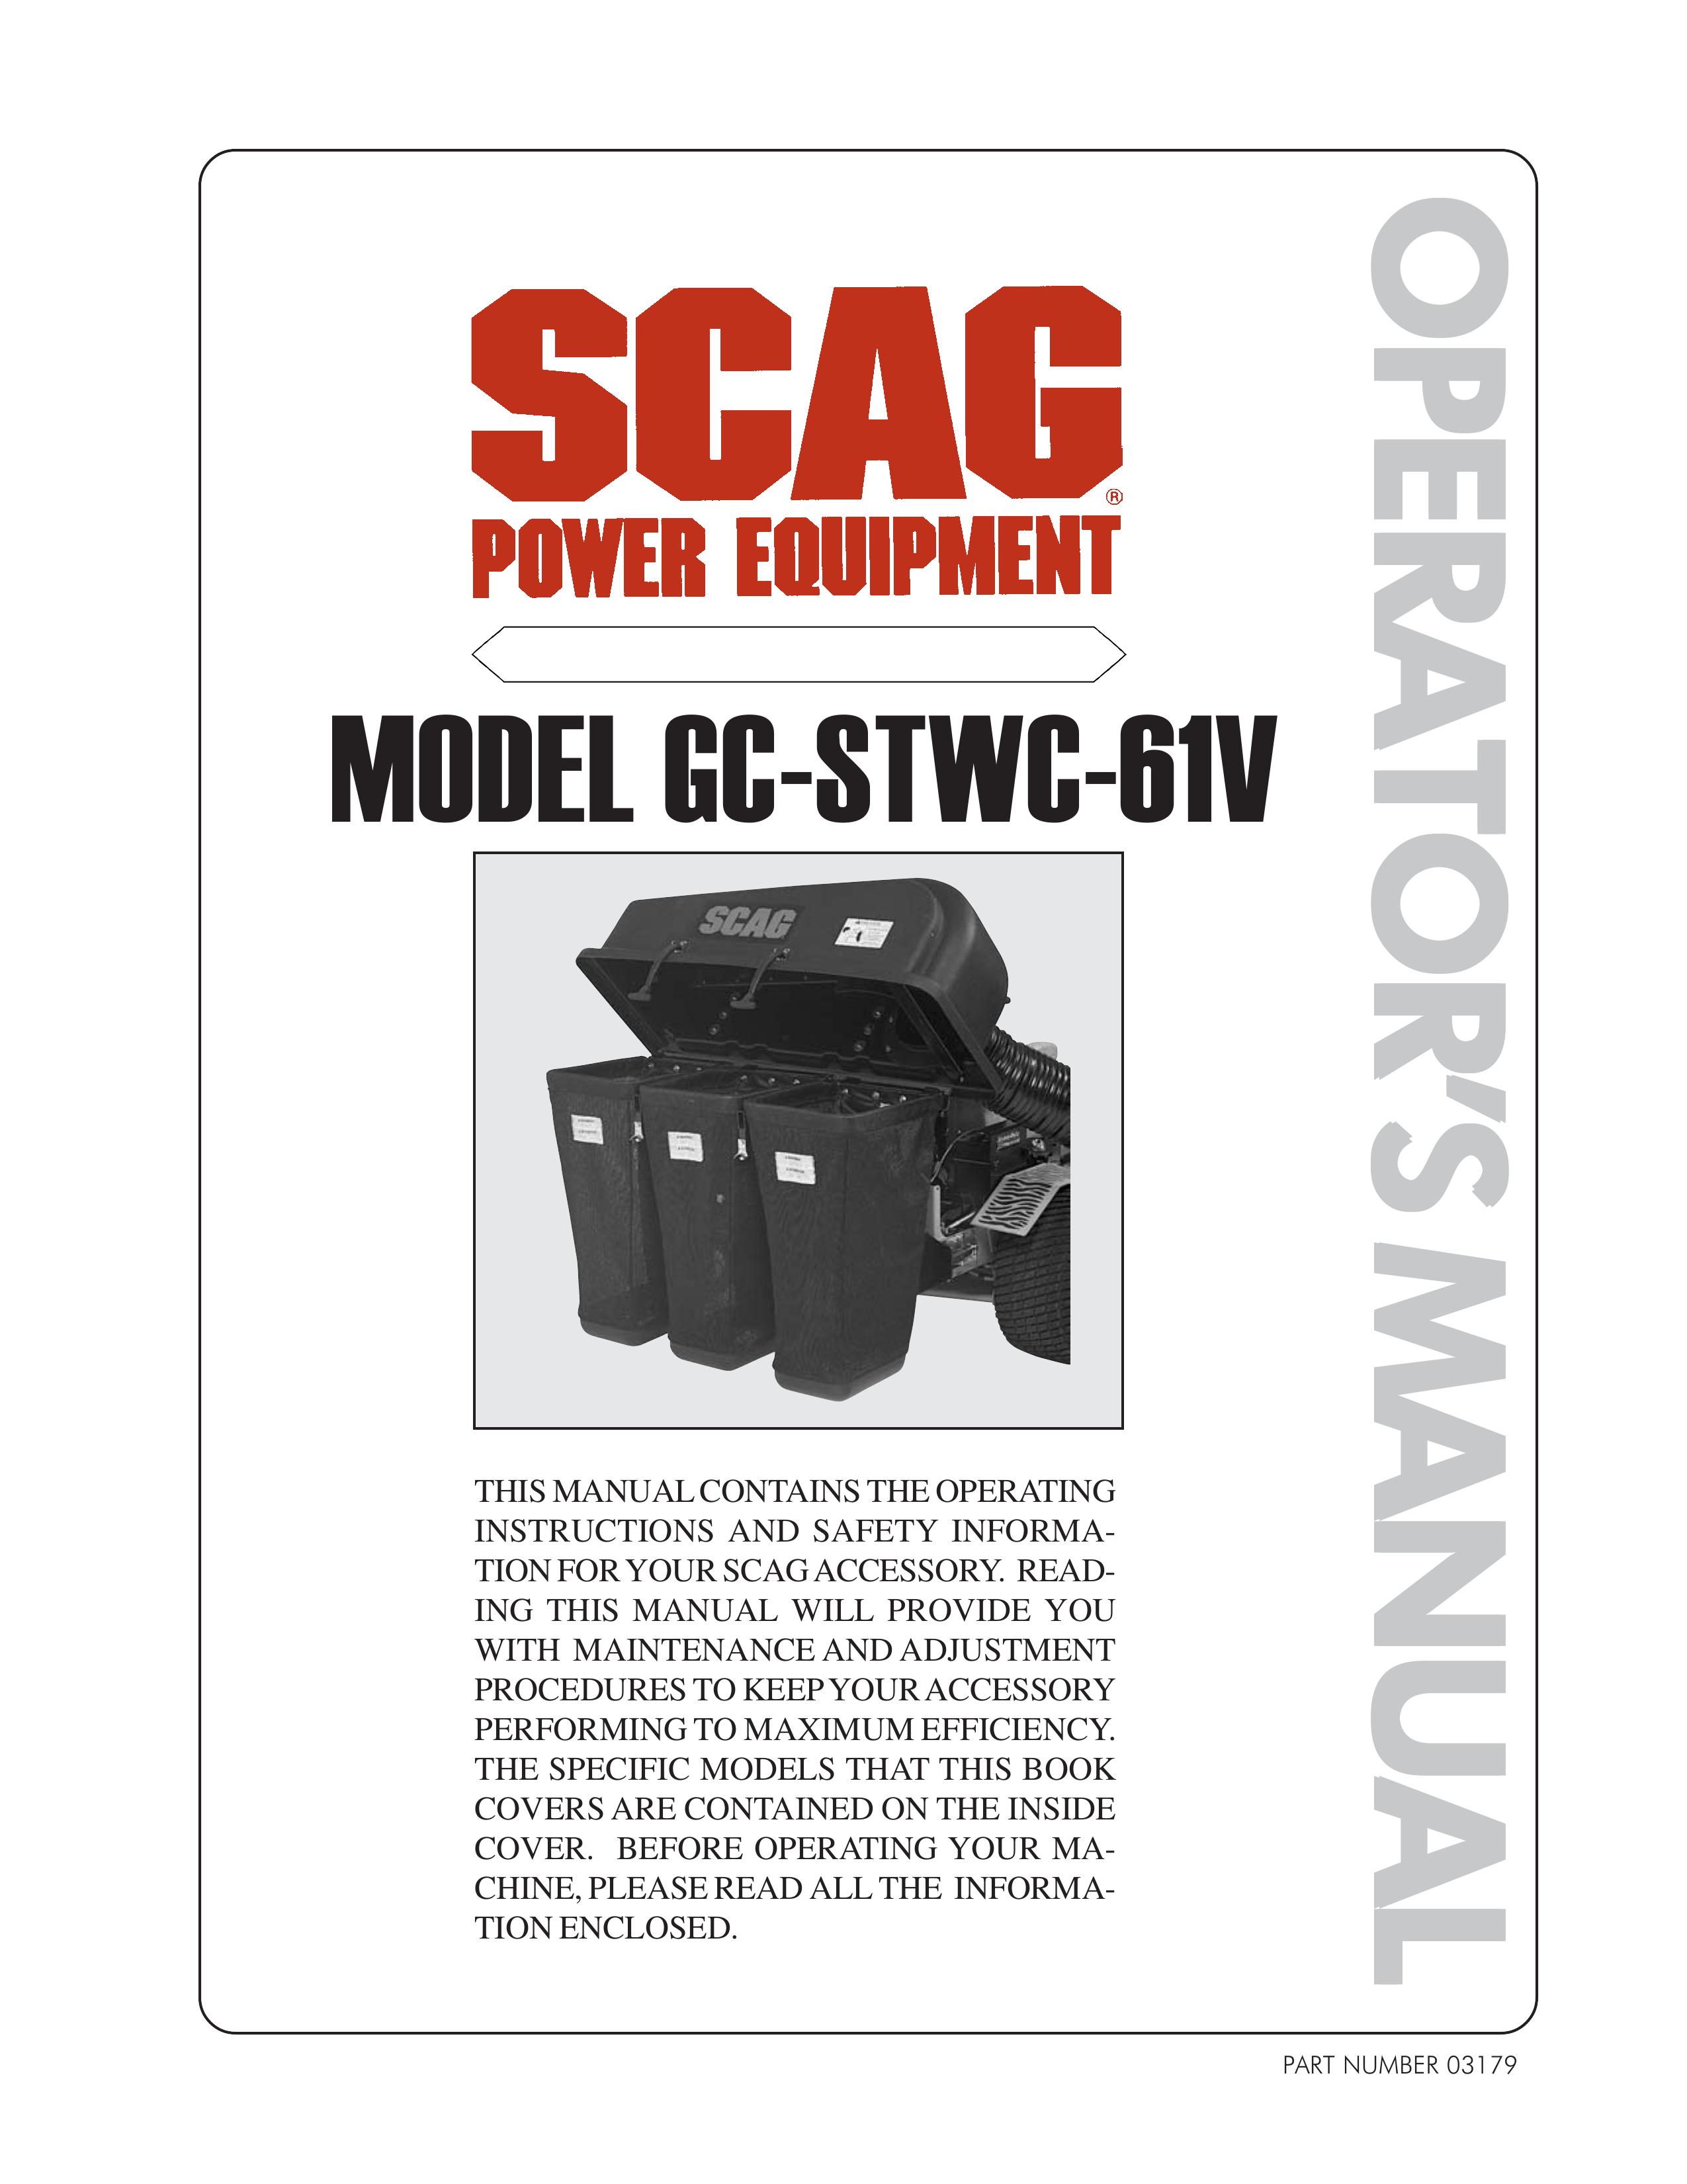 Scag Power Equipment GC-STWC-61V Lawn Mower User Manual